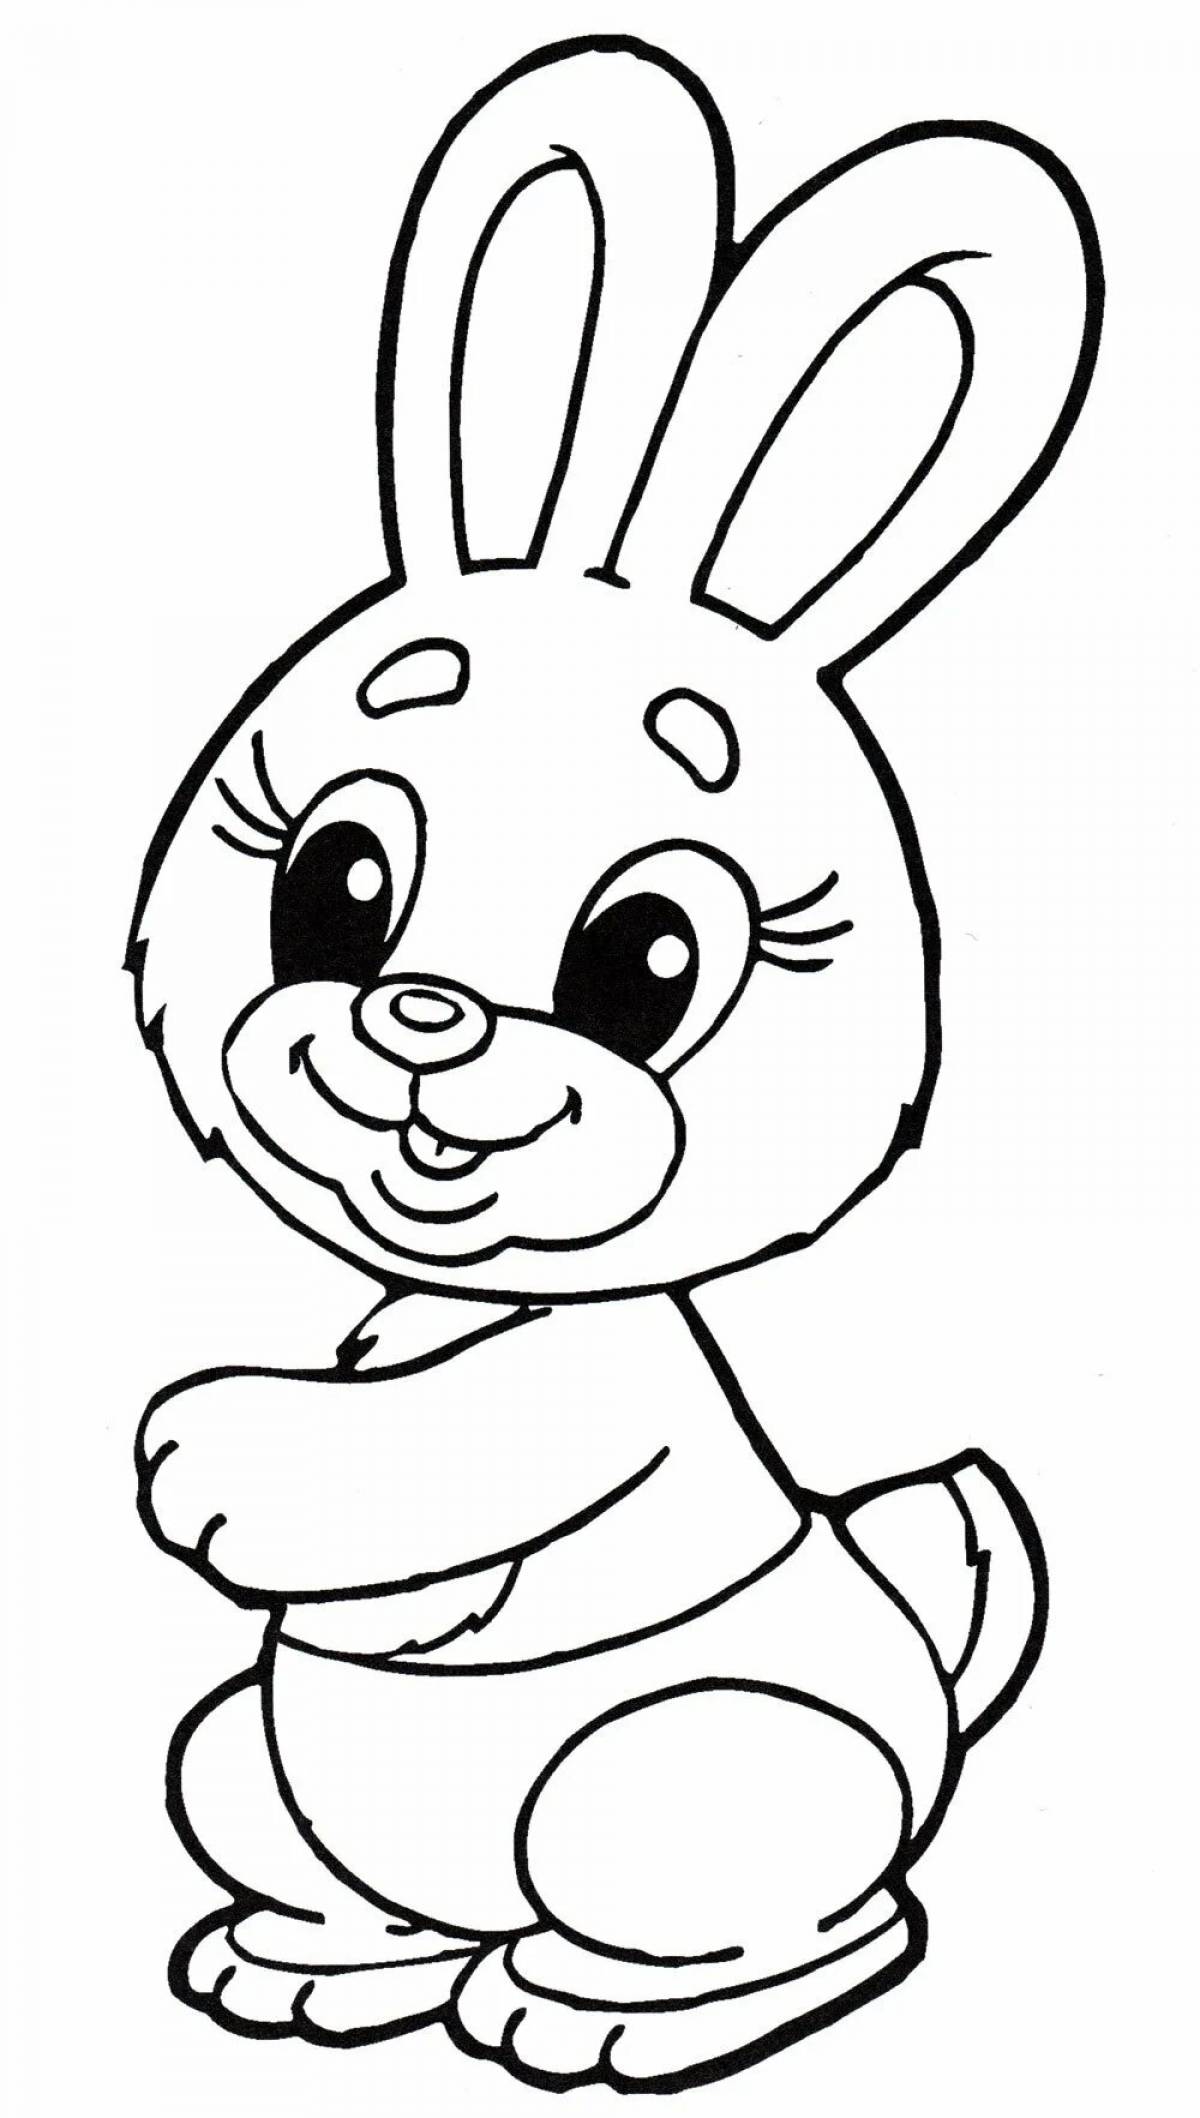 Незабываемая раскраска зайца для детей 2-3 лет